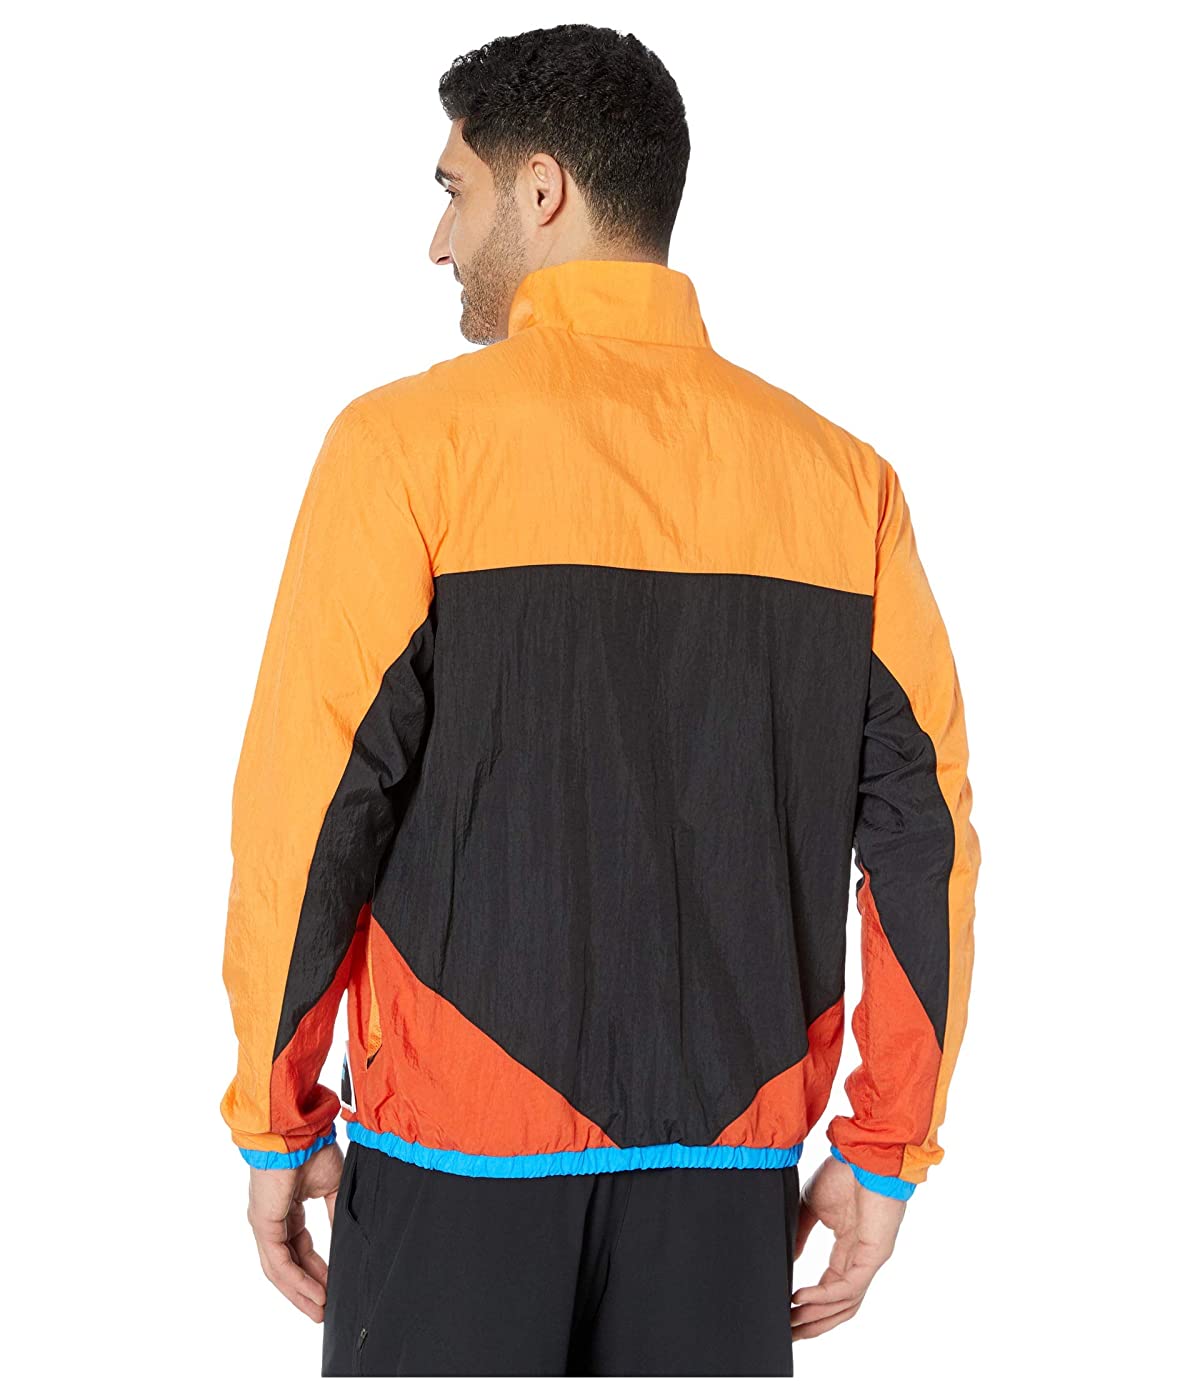 Nike Flight Jacket Black/Alpha Orange/Rust Factor/Black - image 1 of 3